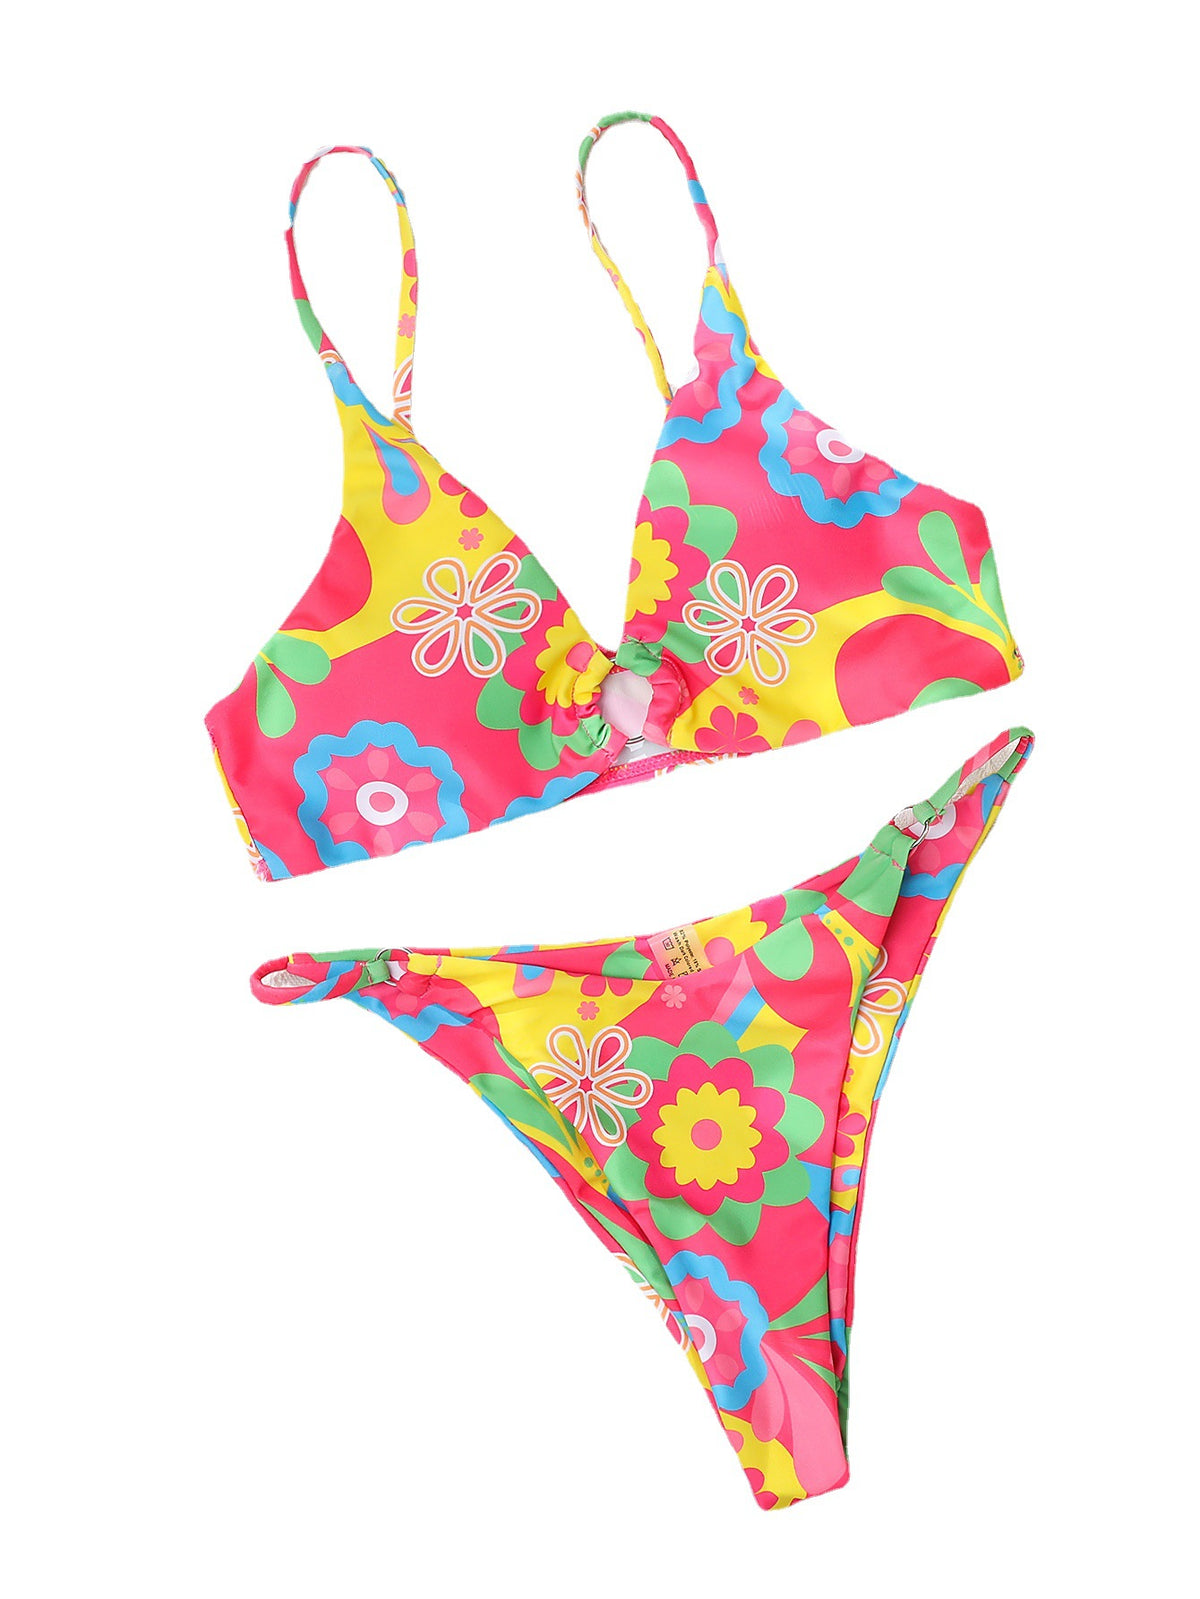 New Floral Print Triangle Cup Sexy Bikini Split Swimsuit Swimwear Women